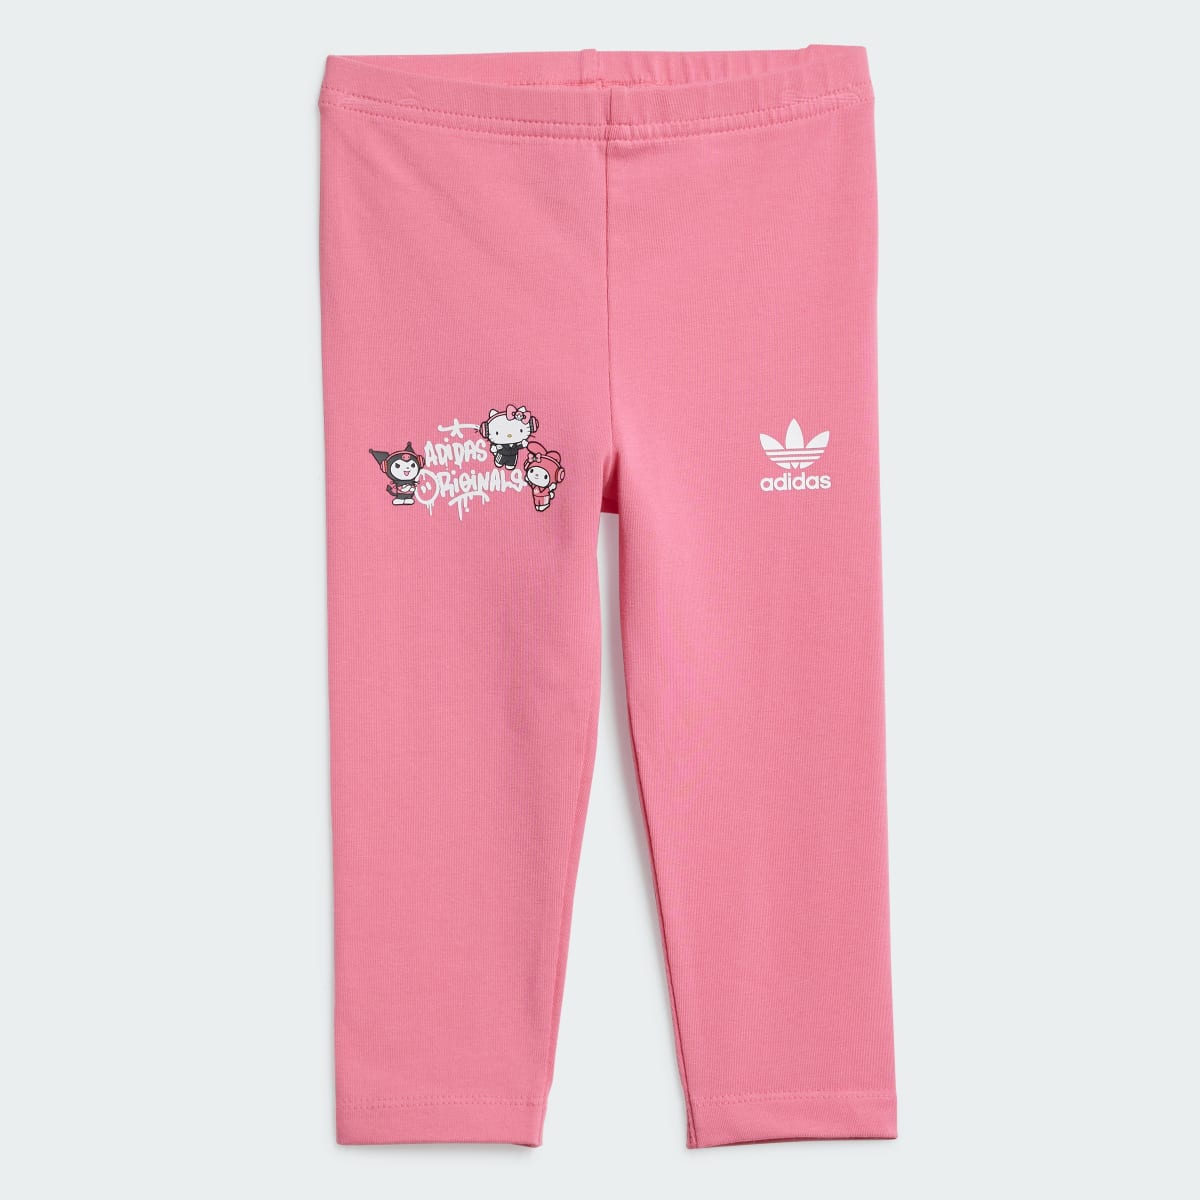 Adidas Originals x Hello Kitty Elbise Tayt Takımı. 5